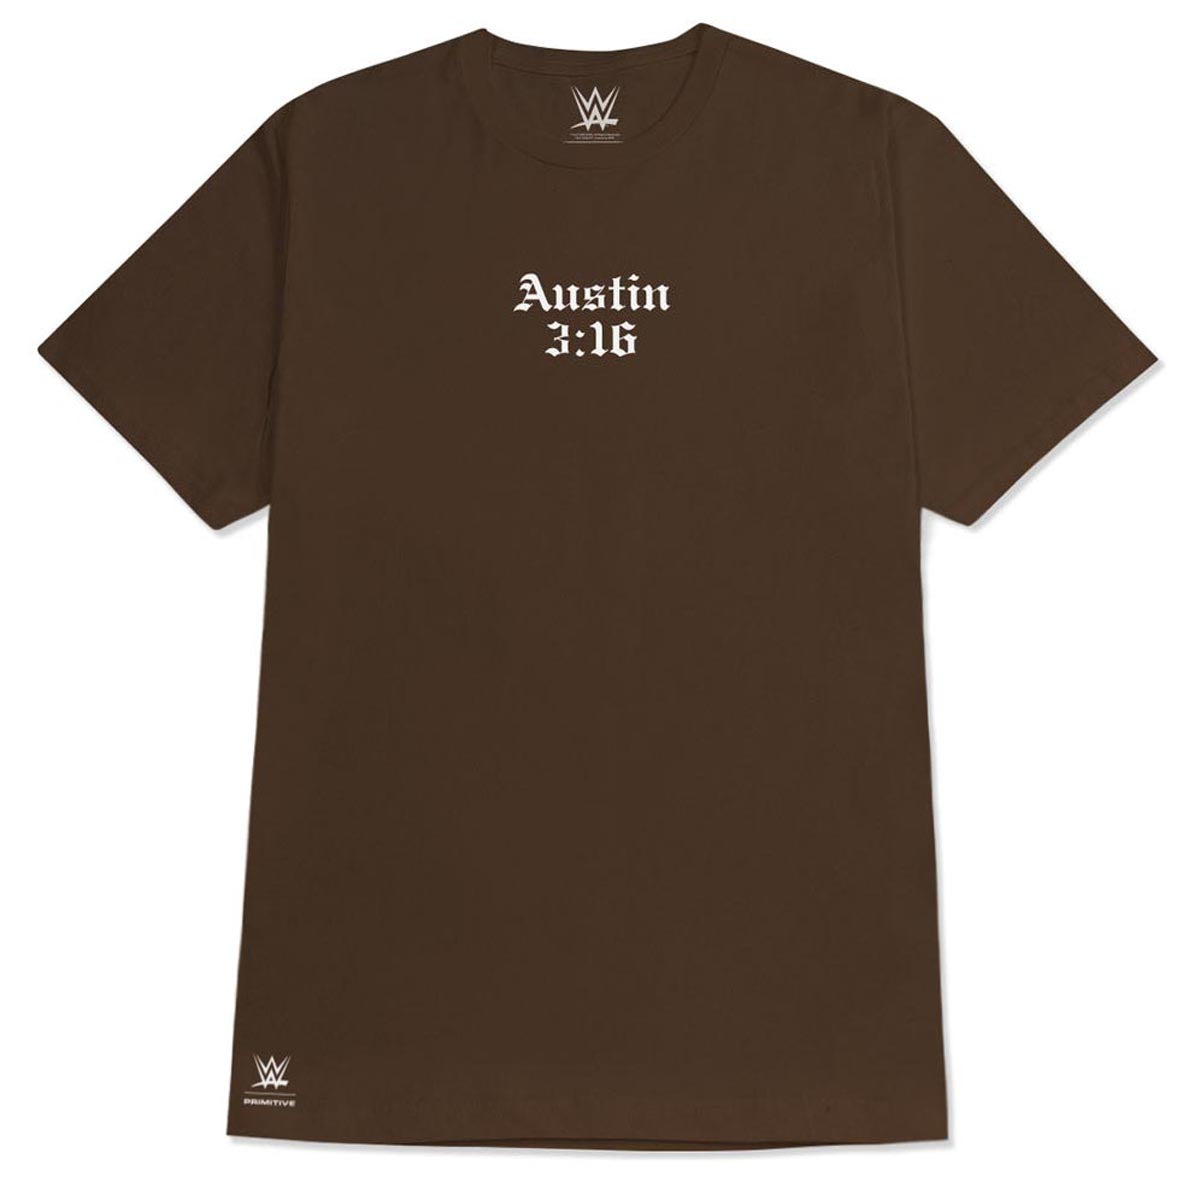 Primitive x WWE Austin Chrome T-Shirt - Brown image 2